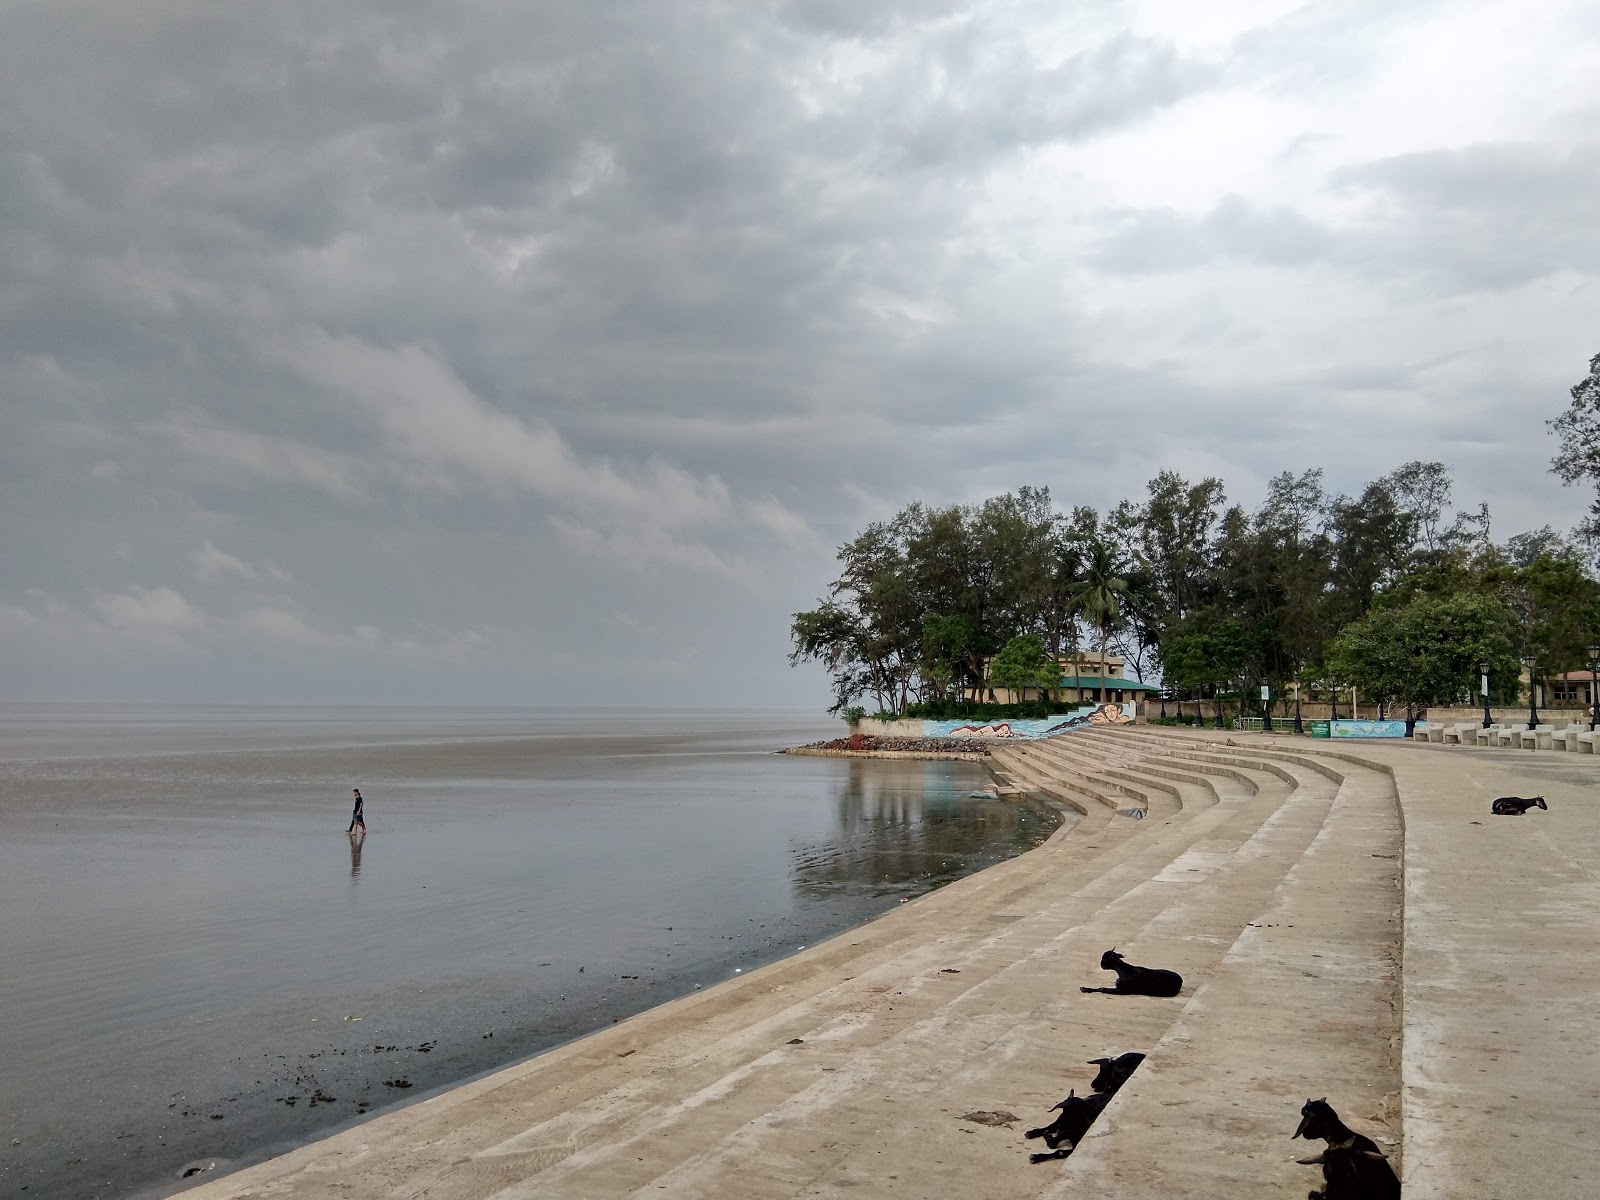 Fotografie cu Chandipur Beach - locul popular printre cunoscătorii de relaxare